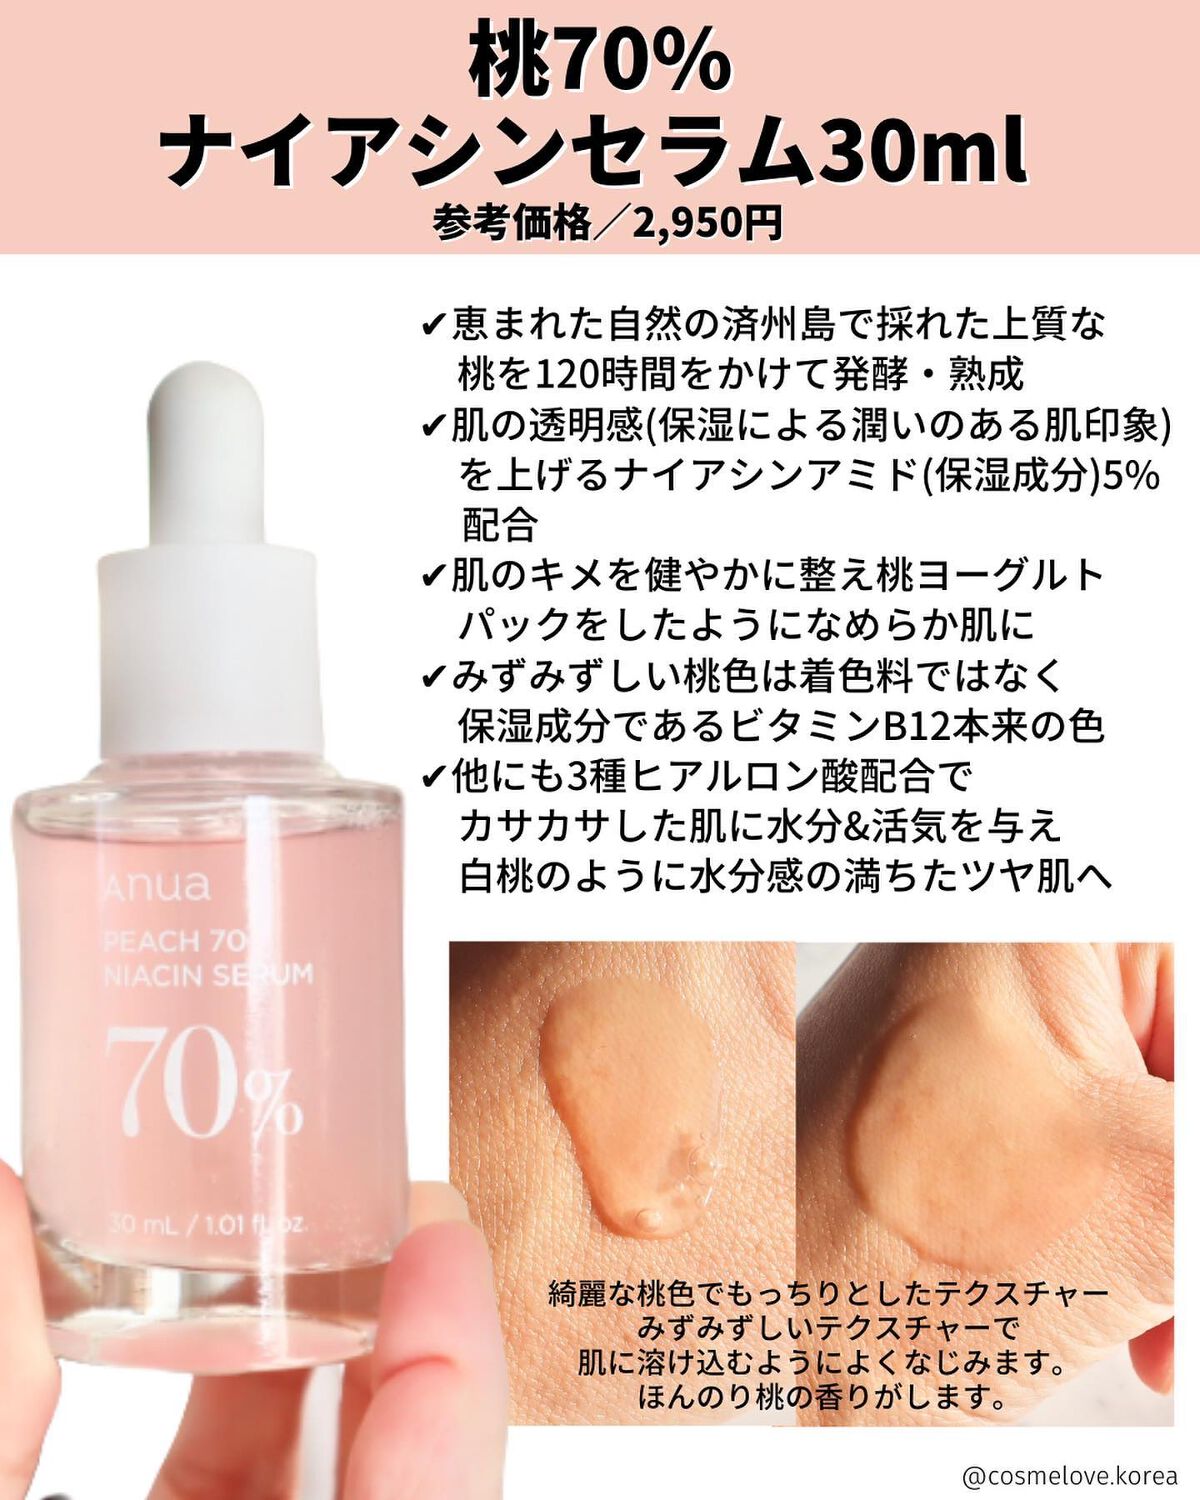 Anua peach 70 niaci serum アヌア美容液